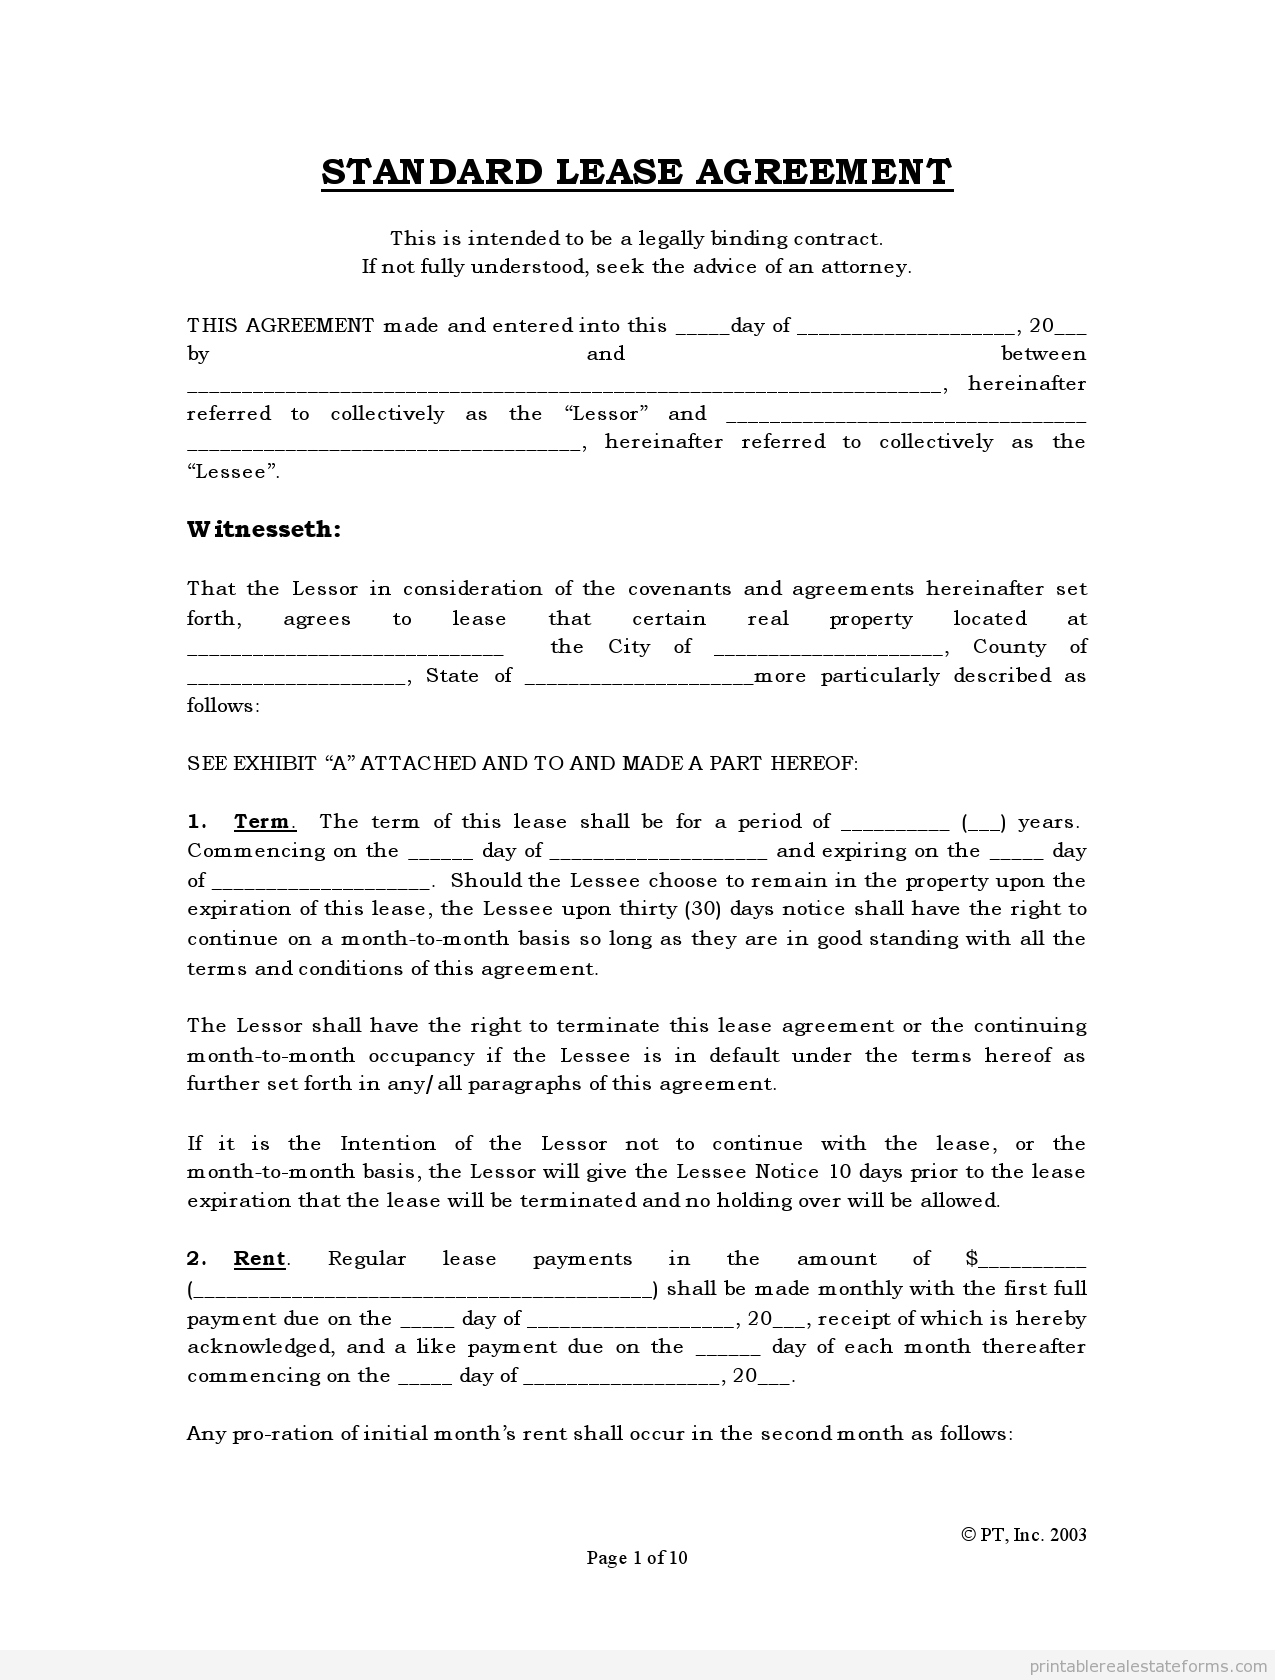 Free Rental Agreements To Print | Free Standard Lease Agreement Form - Free Printable Rental Agreement